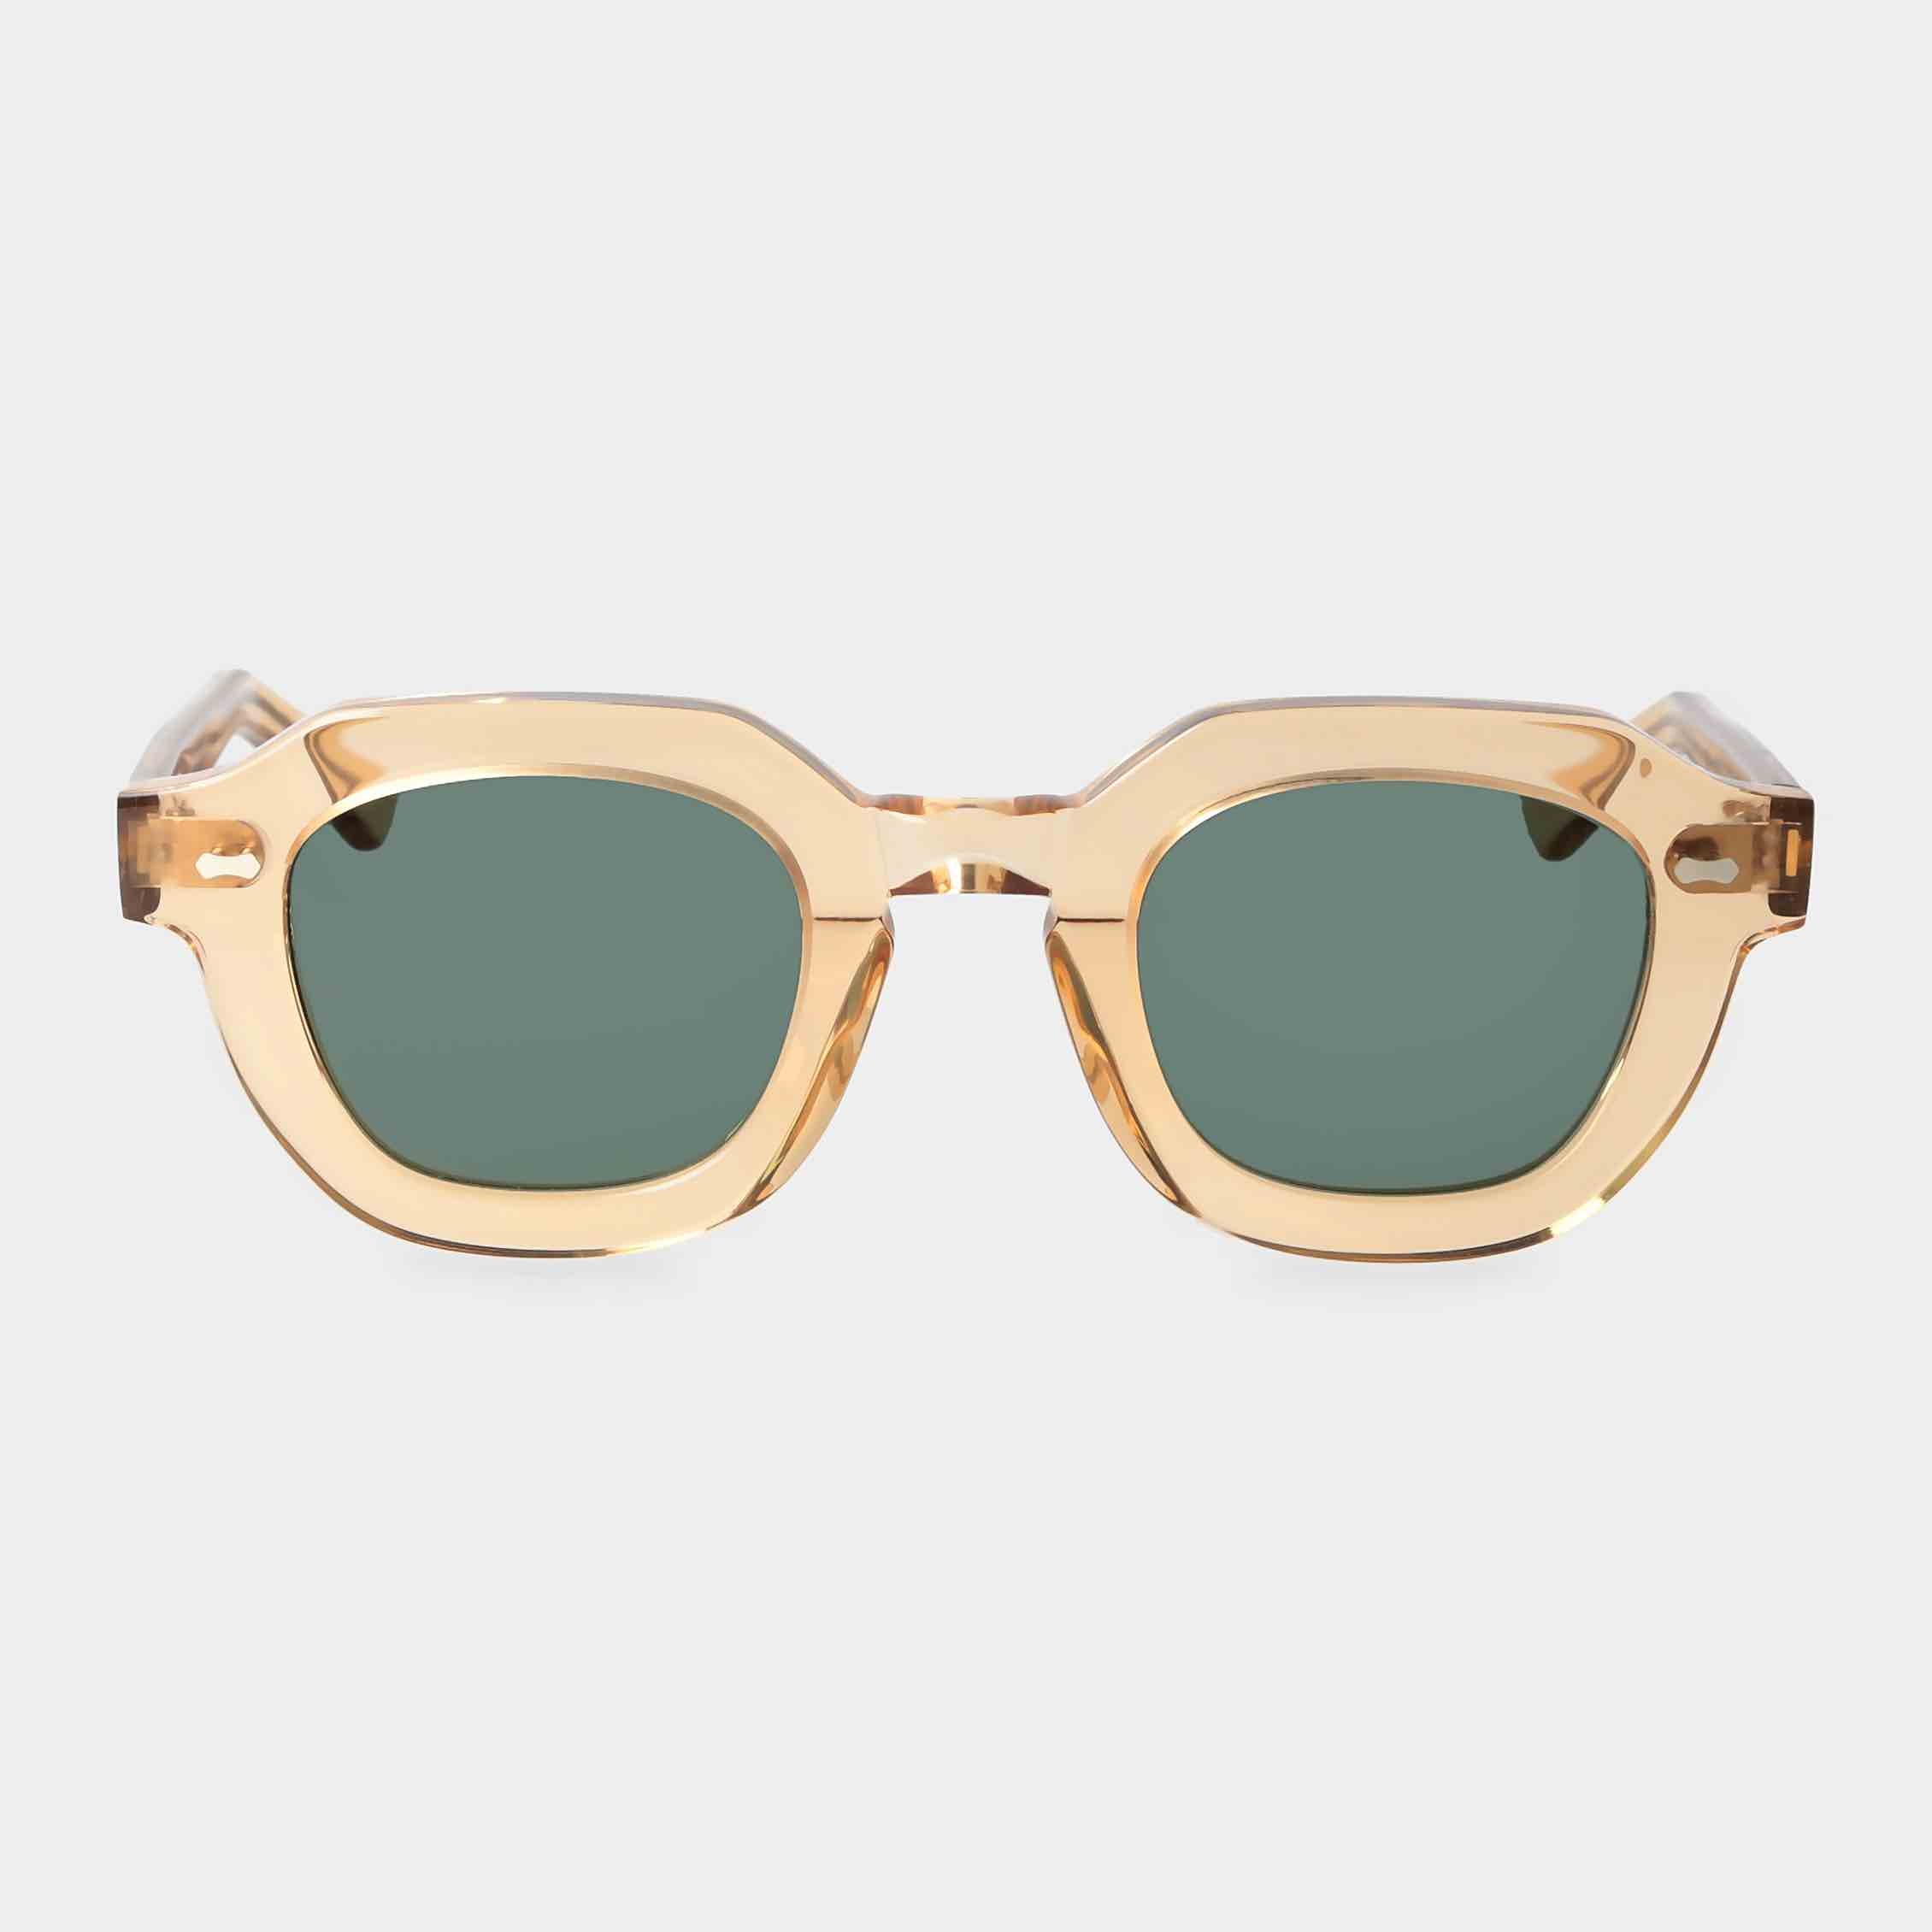 sunglasses-juta-eco-champagne-bottle-green-sustainable-tbd-eyewear-front